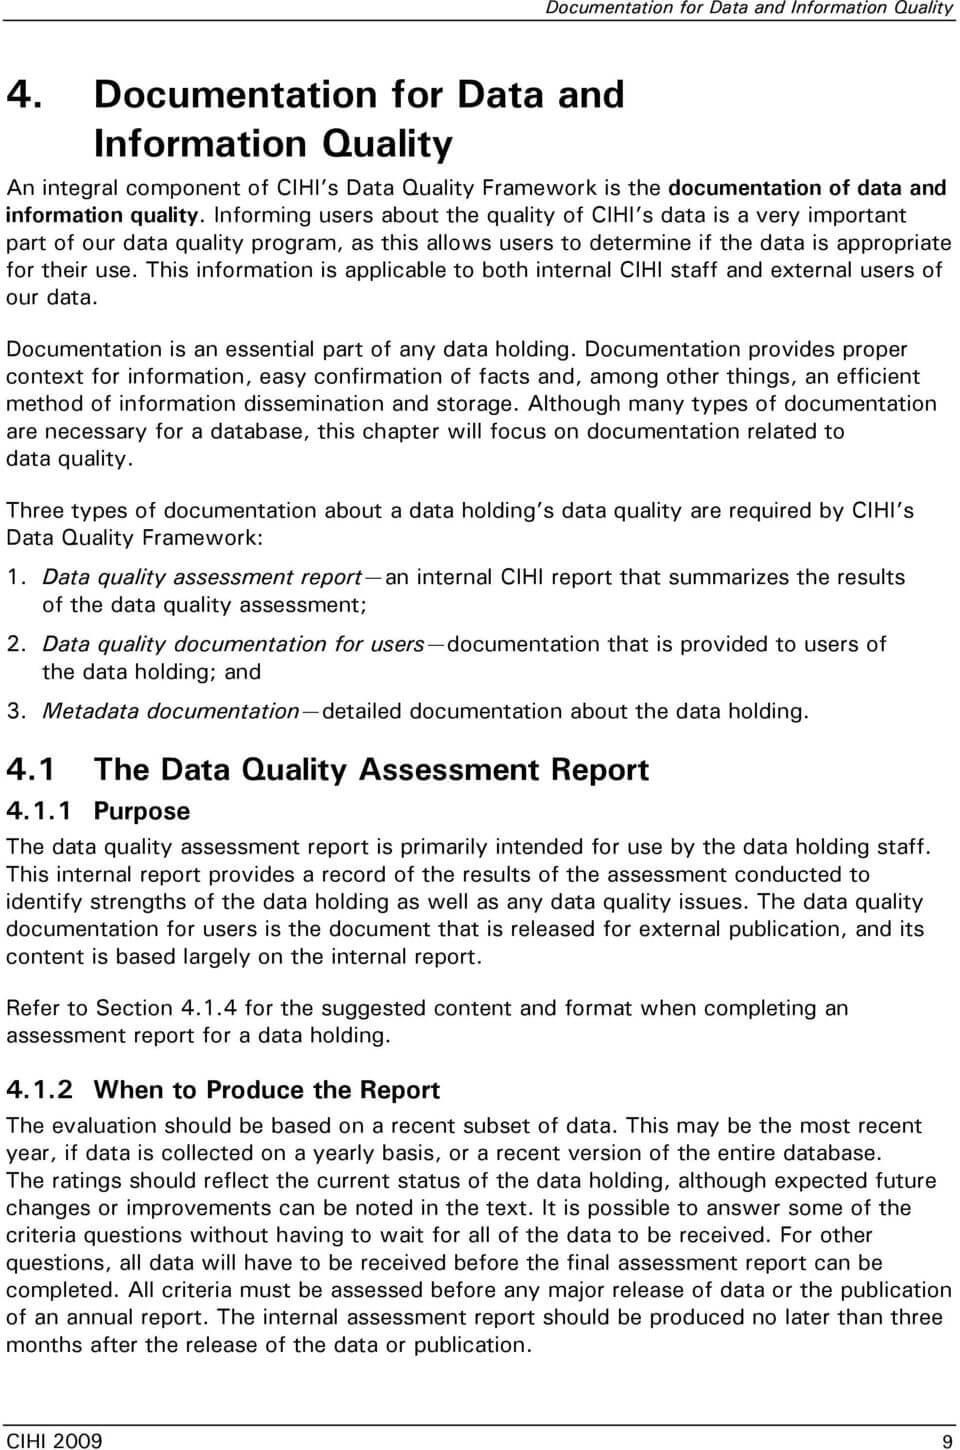 The Cihi Data Quality Framework – Pdf Free Download Regarding Data Quality Assessment Report Template